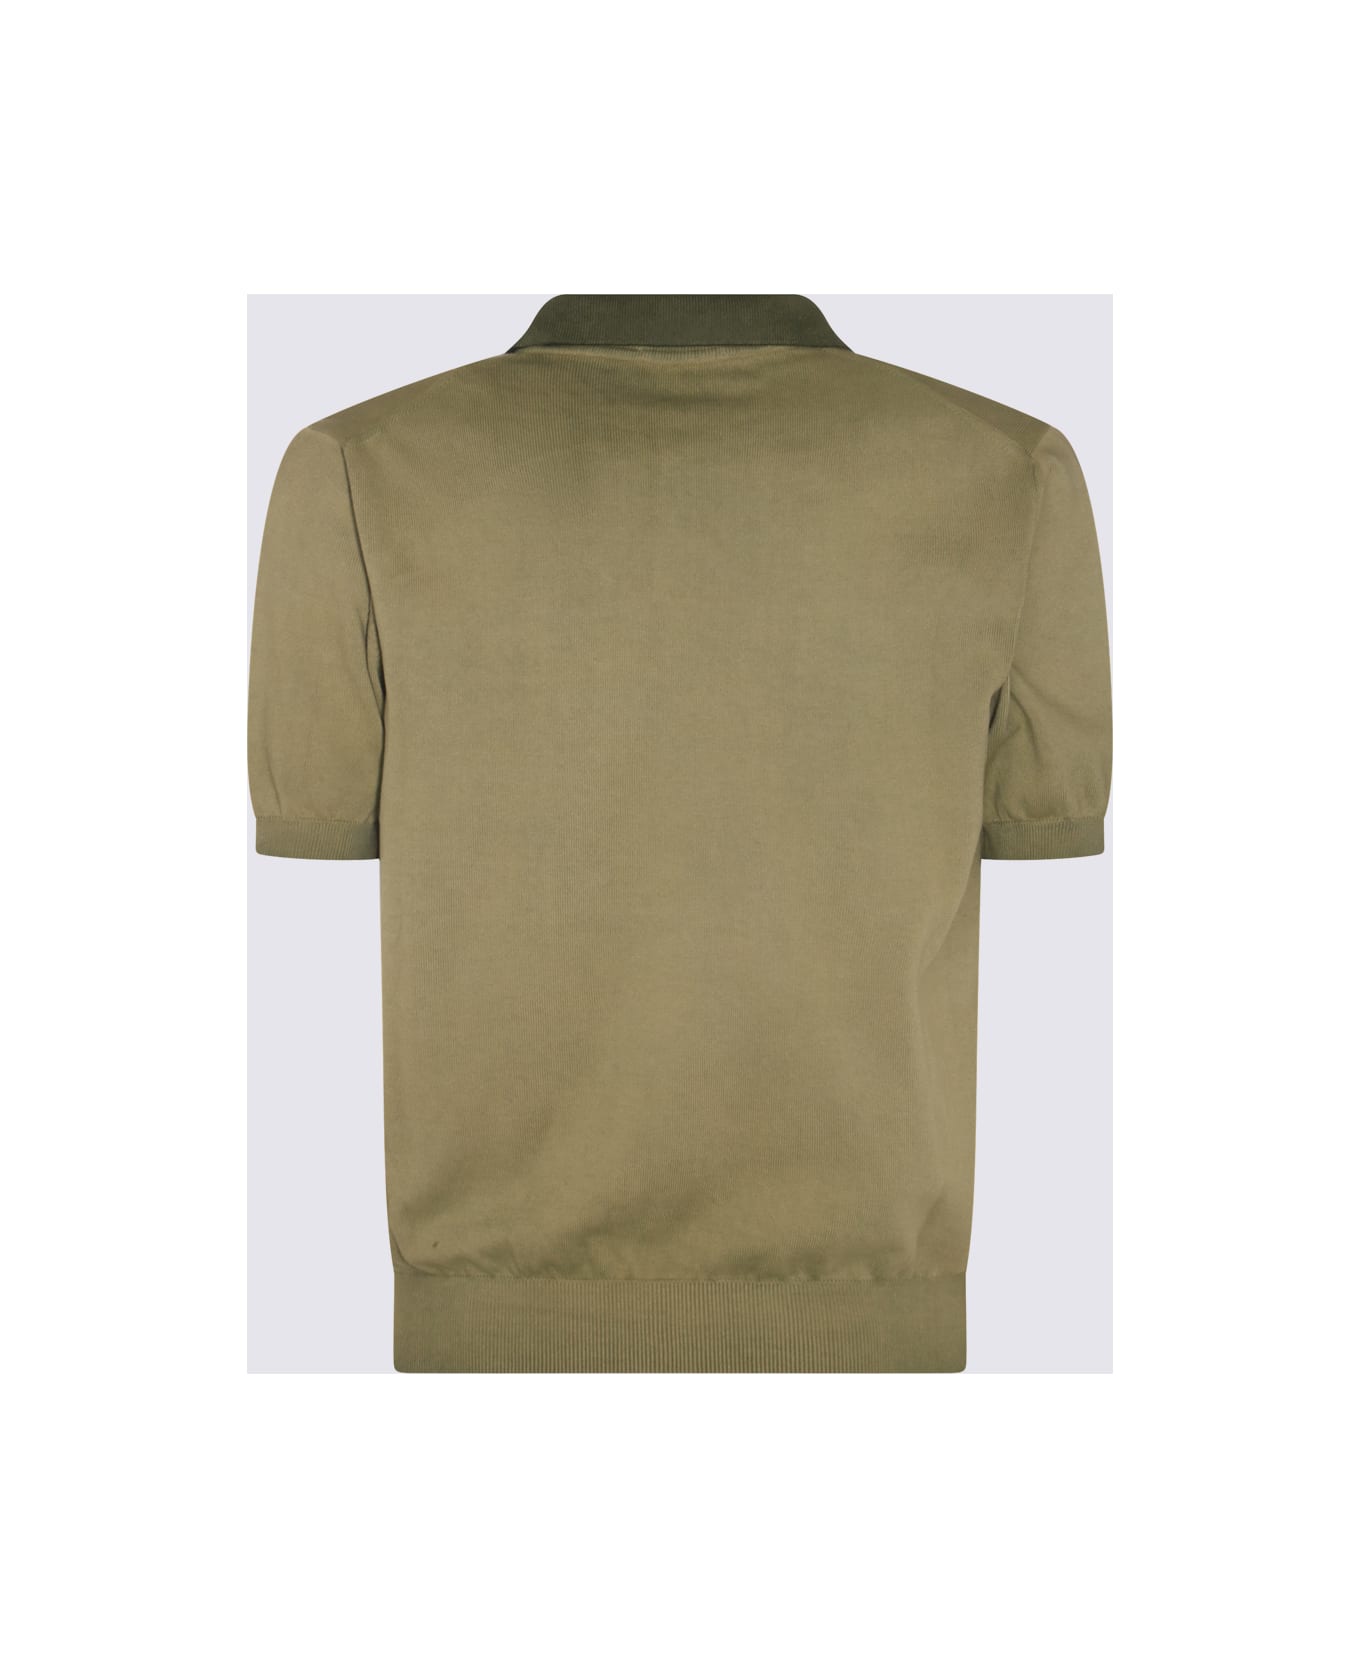 Altea Army Cotton Polo Shirt - Army